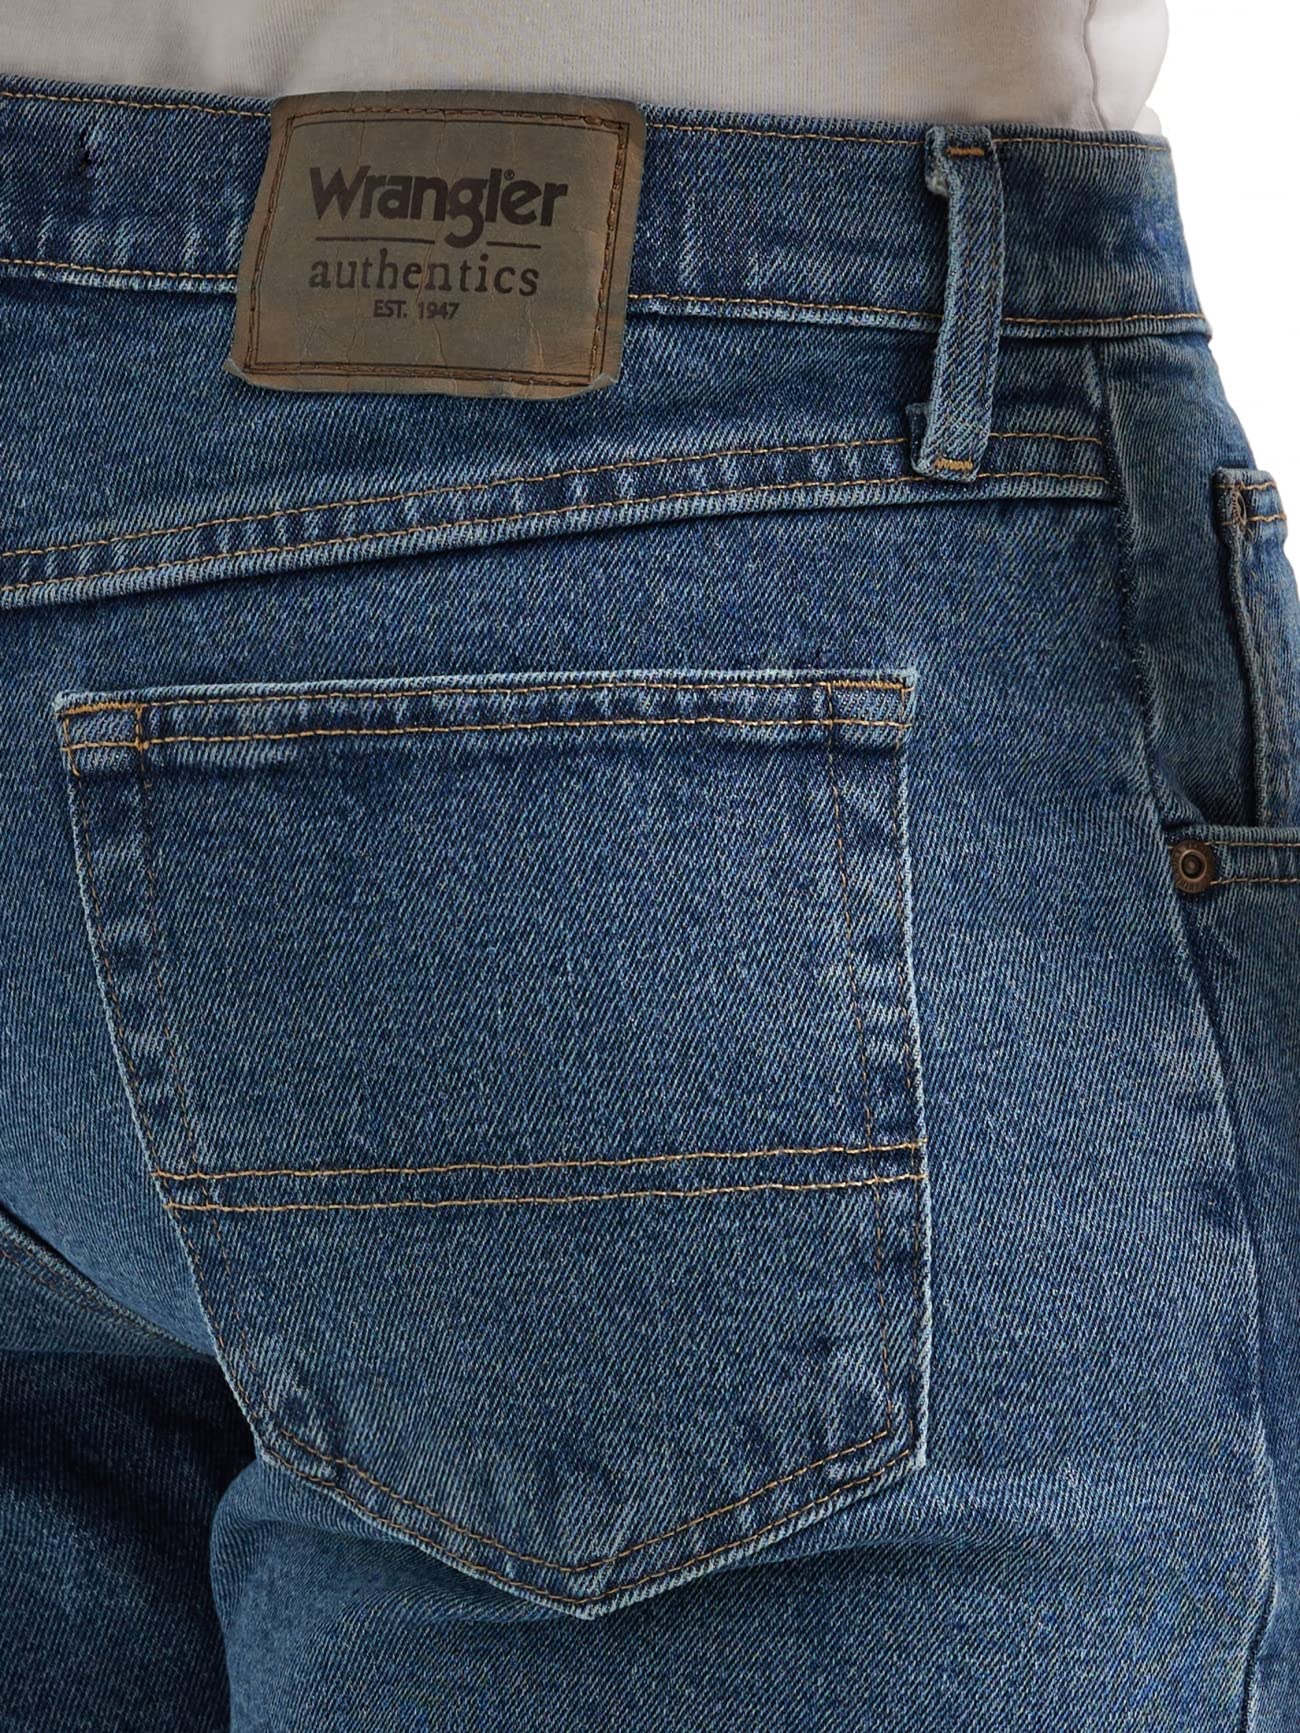 Wrangler Authentics Men's Classic 5-Pocket Relaxed Fit Jean, Dark Stonewash Flex, 38W x 28L